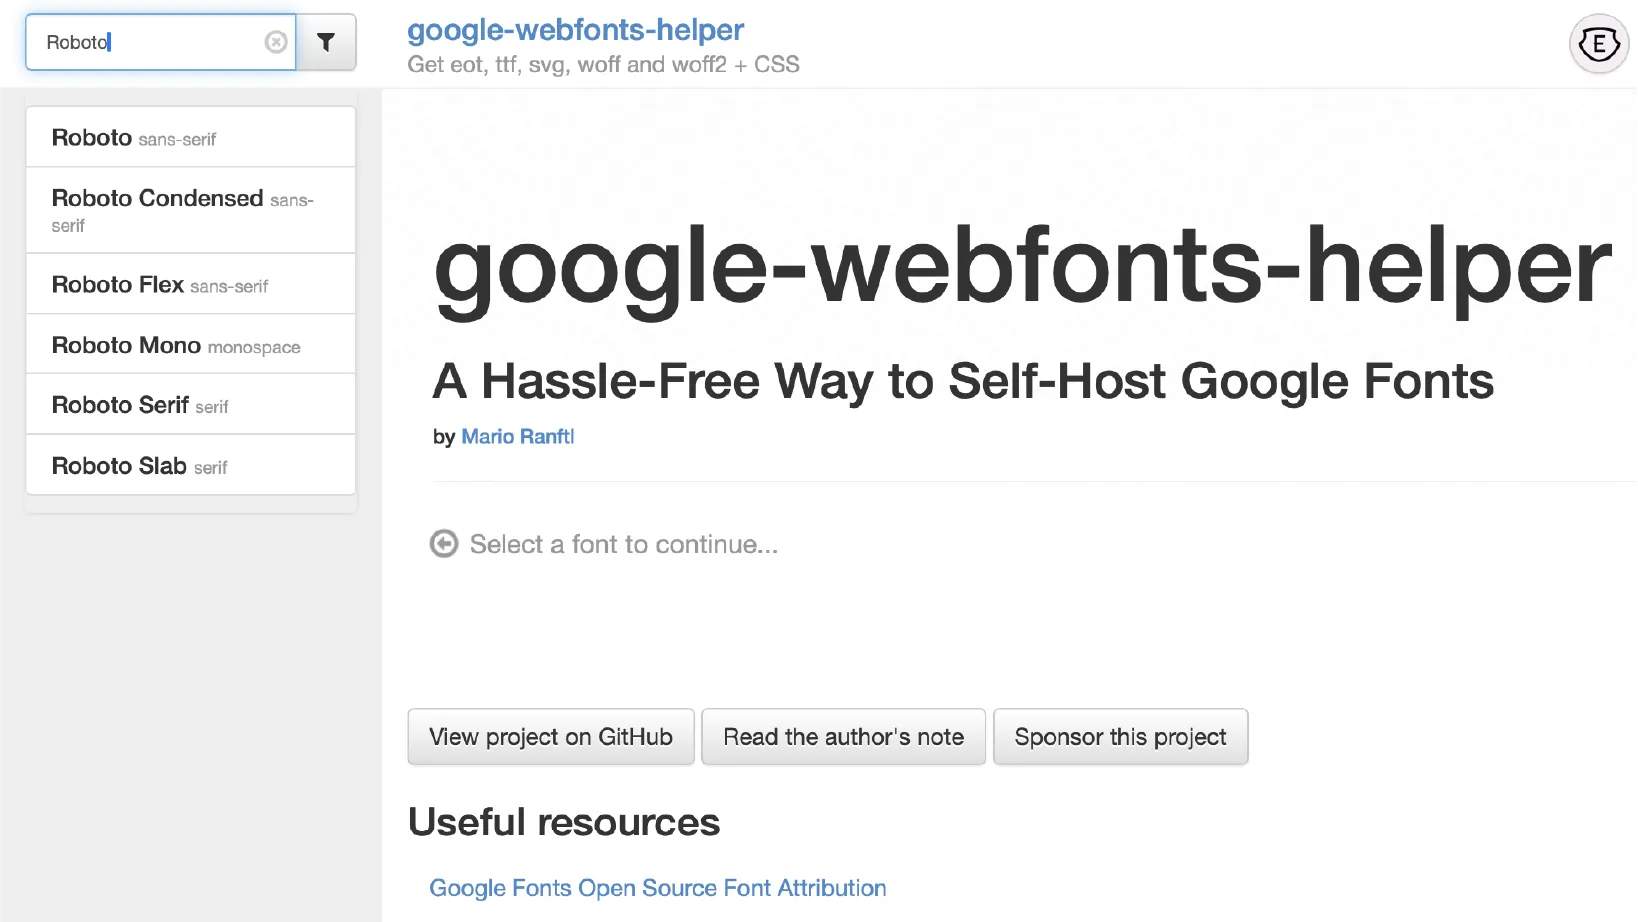 google-webfonts-helper-evoting-media